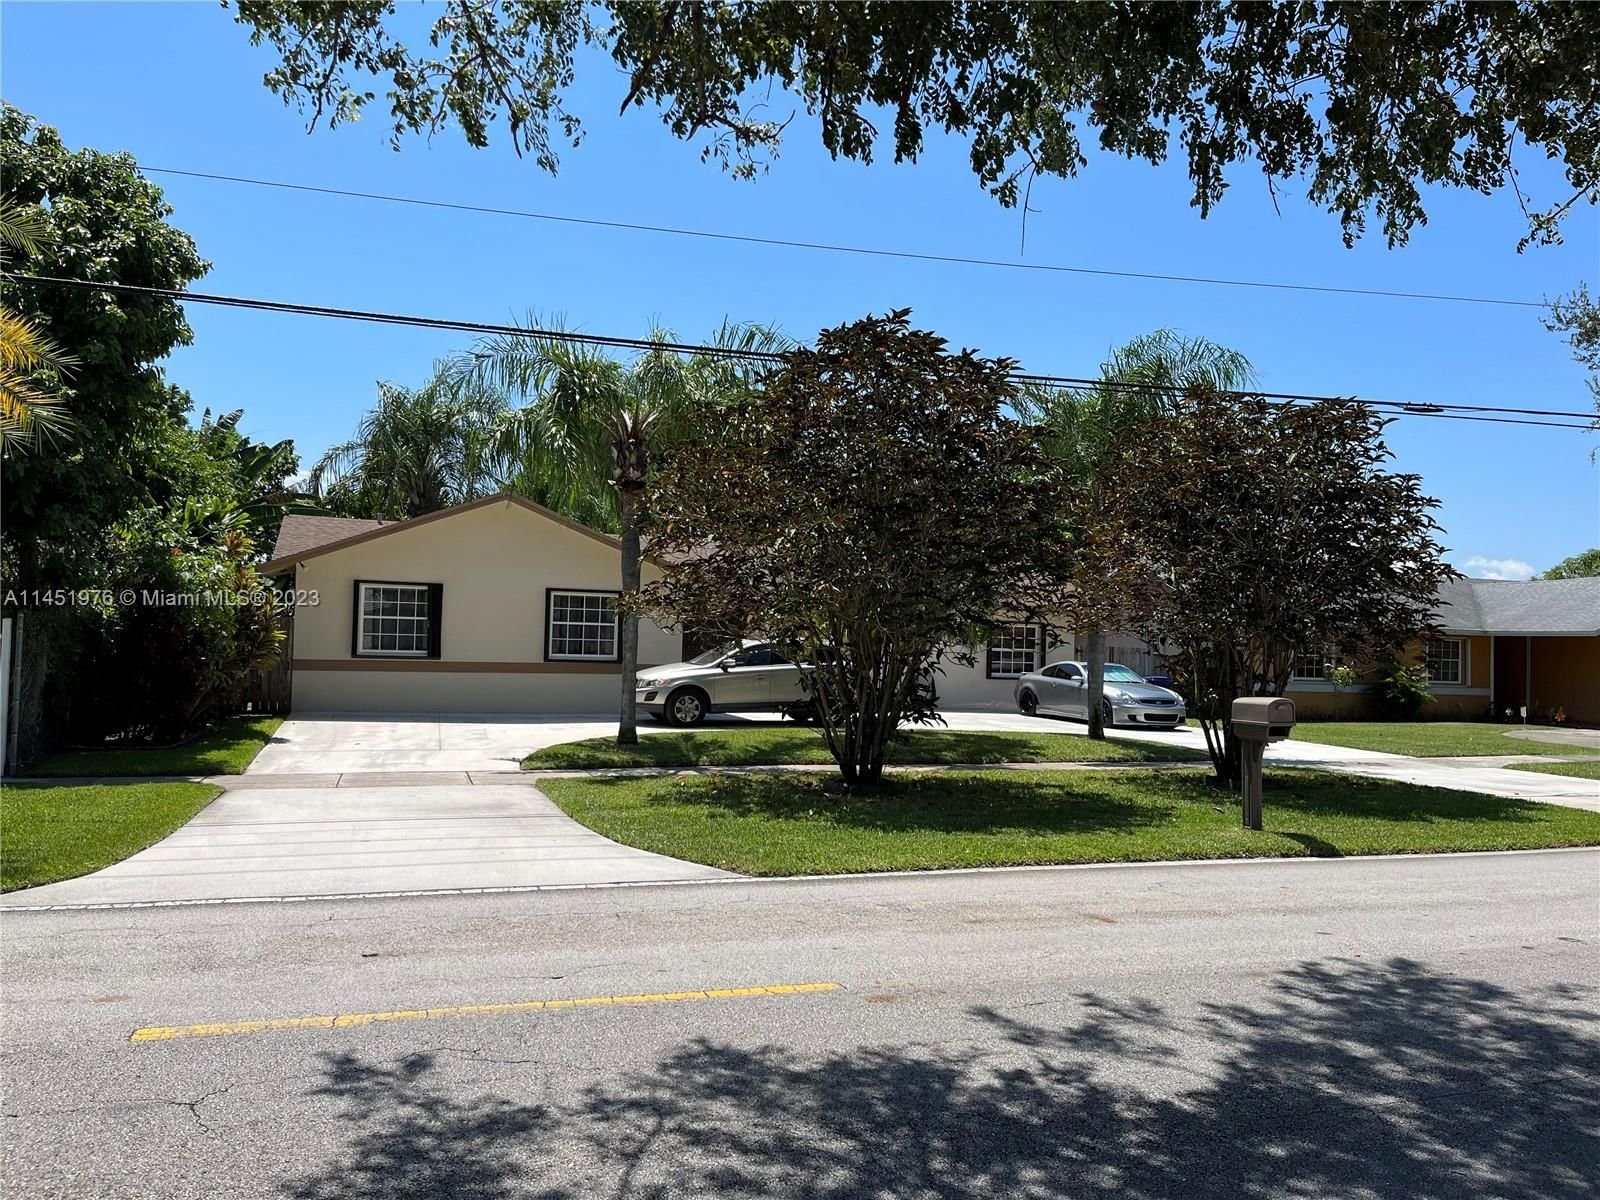 Real estate property located at 13420 256th St, Miami-Dade County, PRINCETON SQUARE SUB, Homestead, FL